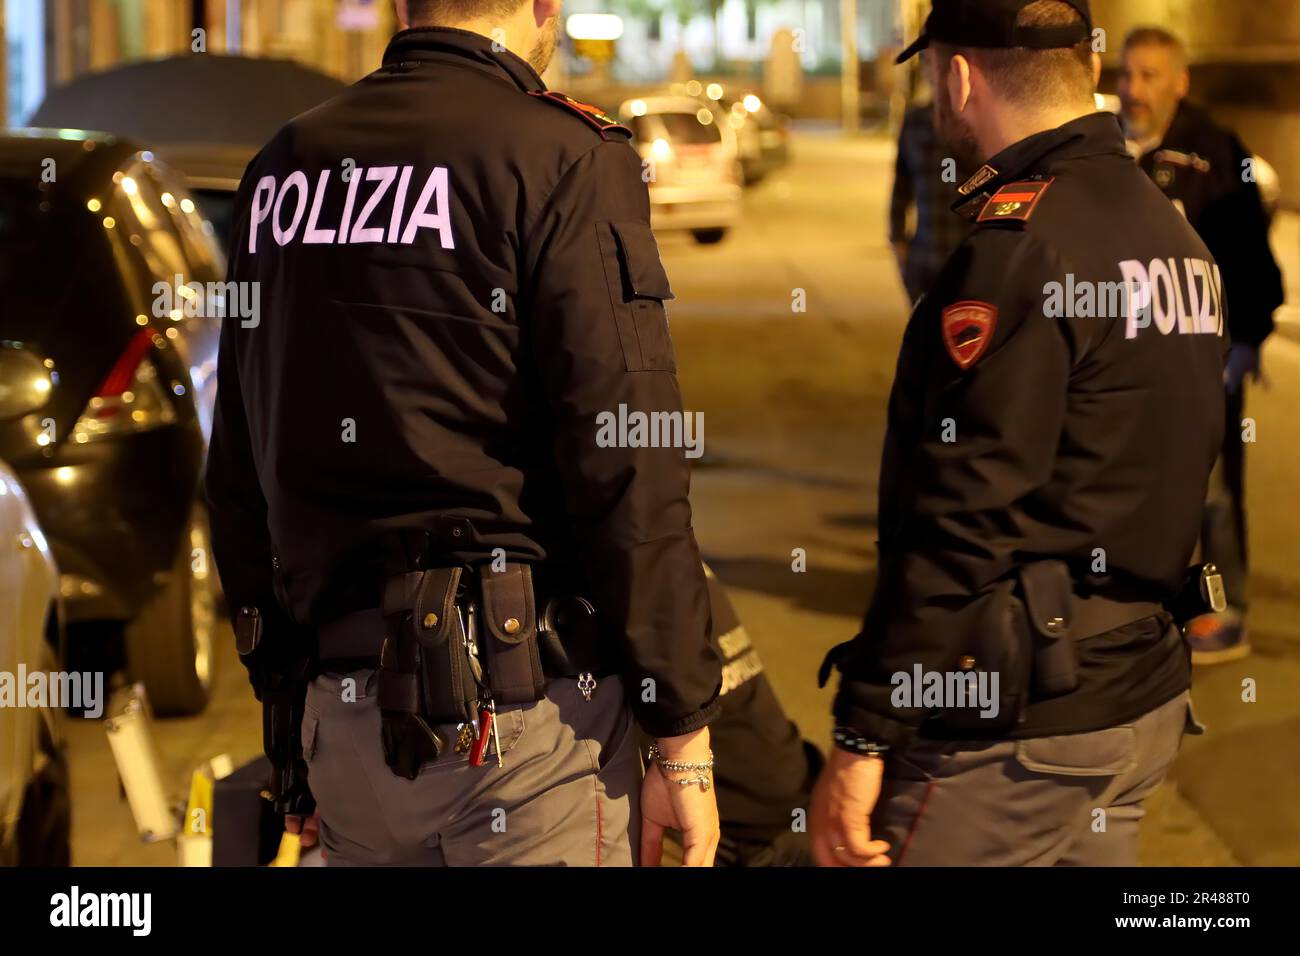 Italian police officers investigating a nighttime murder scene. Italian police at night Stock Photo